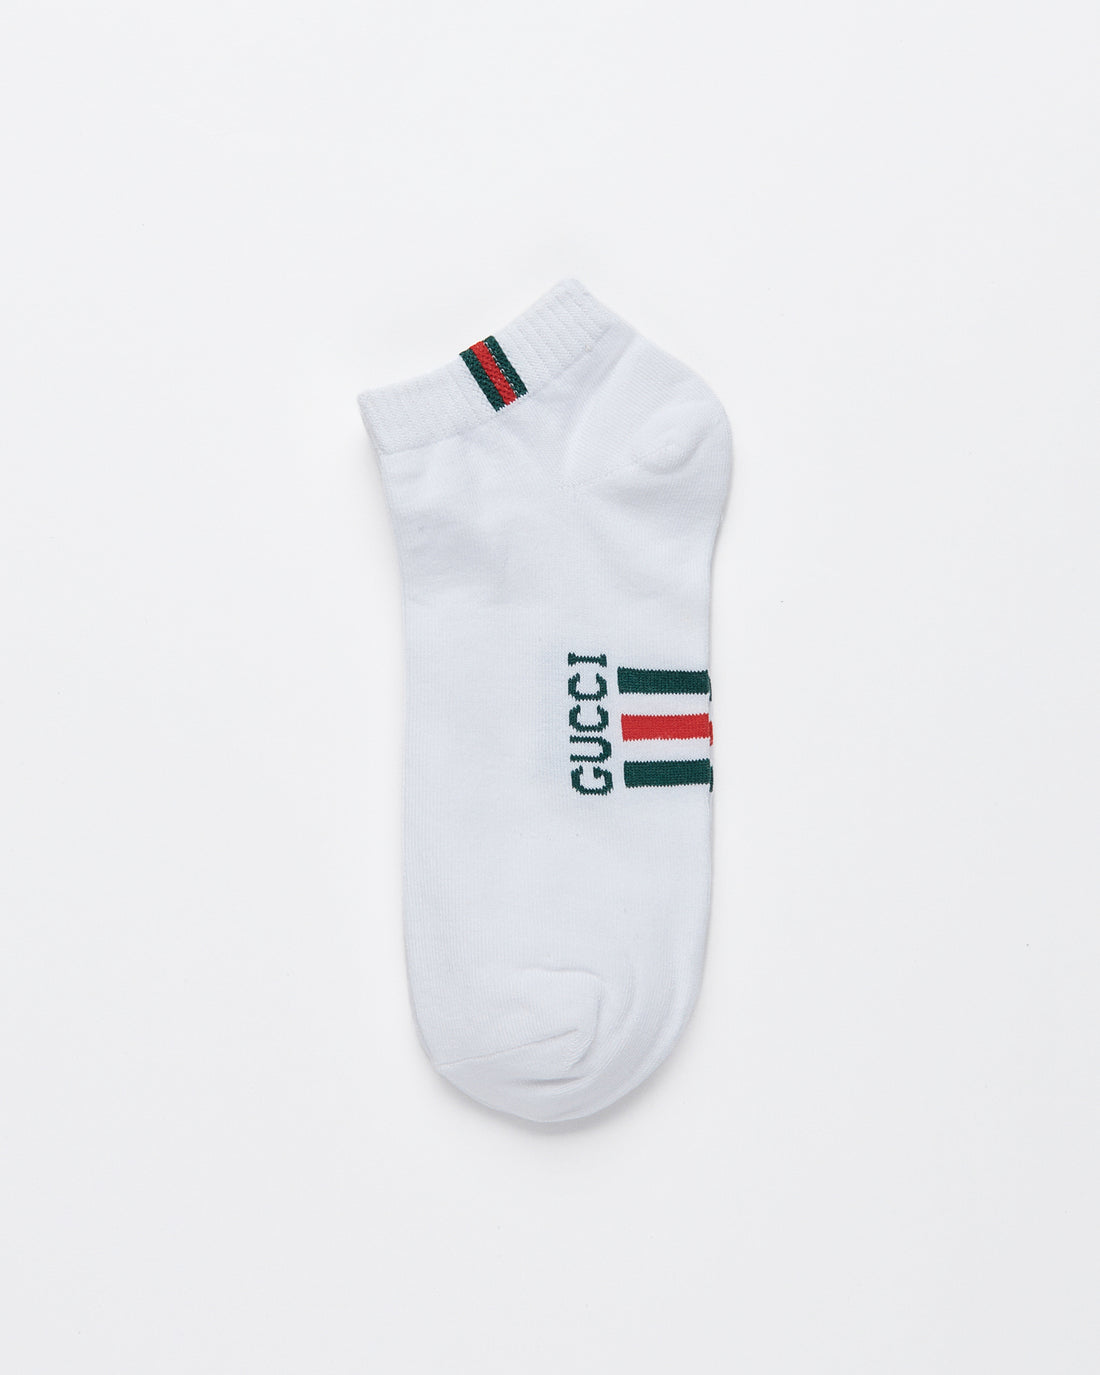 GUC White Low Cut 1 Pairs Socks 1.90